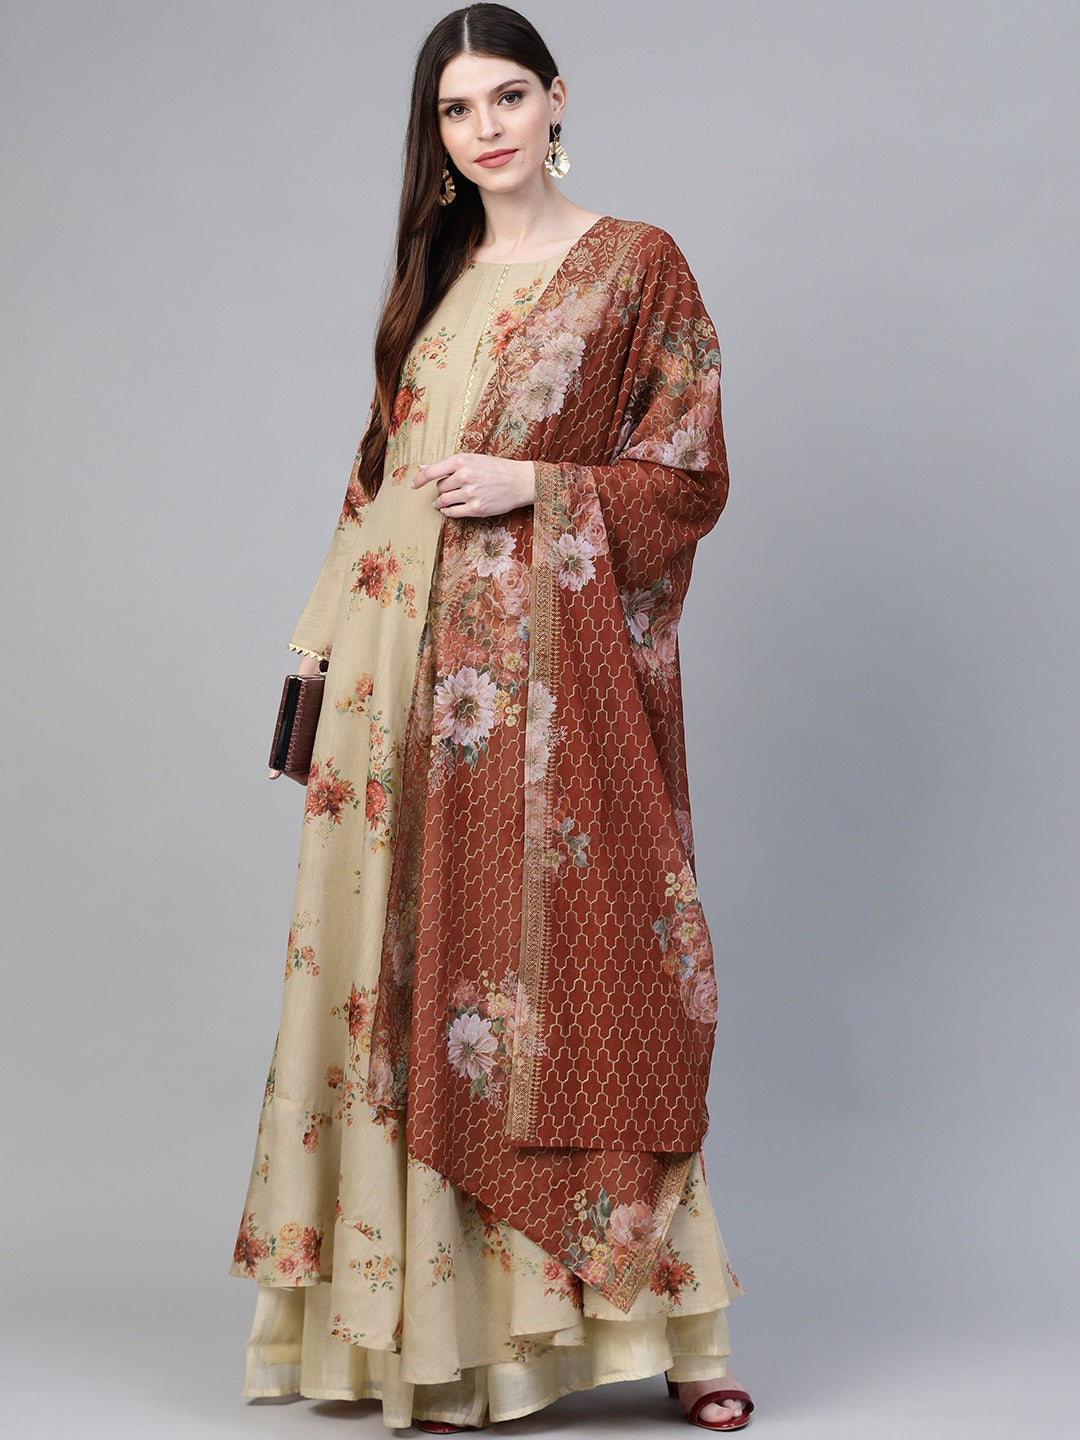 Beige & Brown Floral Printed Anarkali Kurta Dress with Dupatta